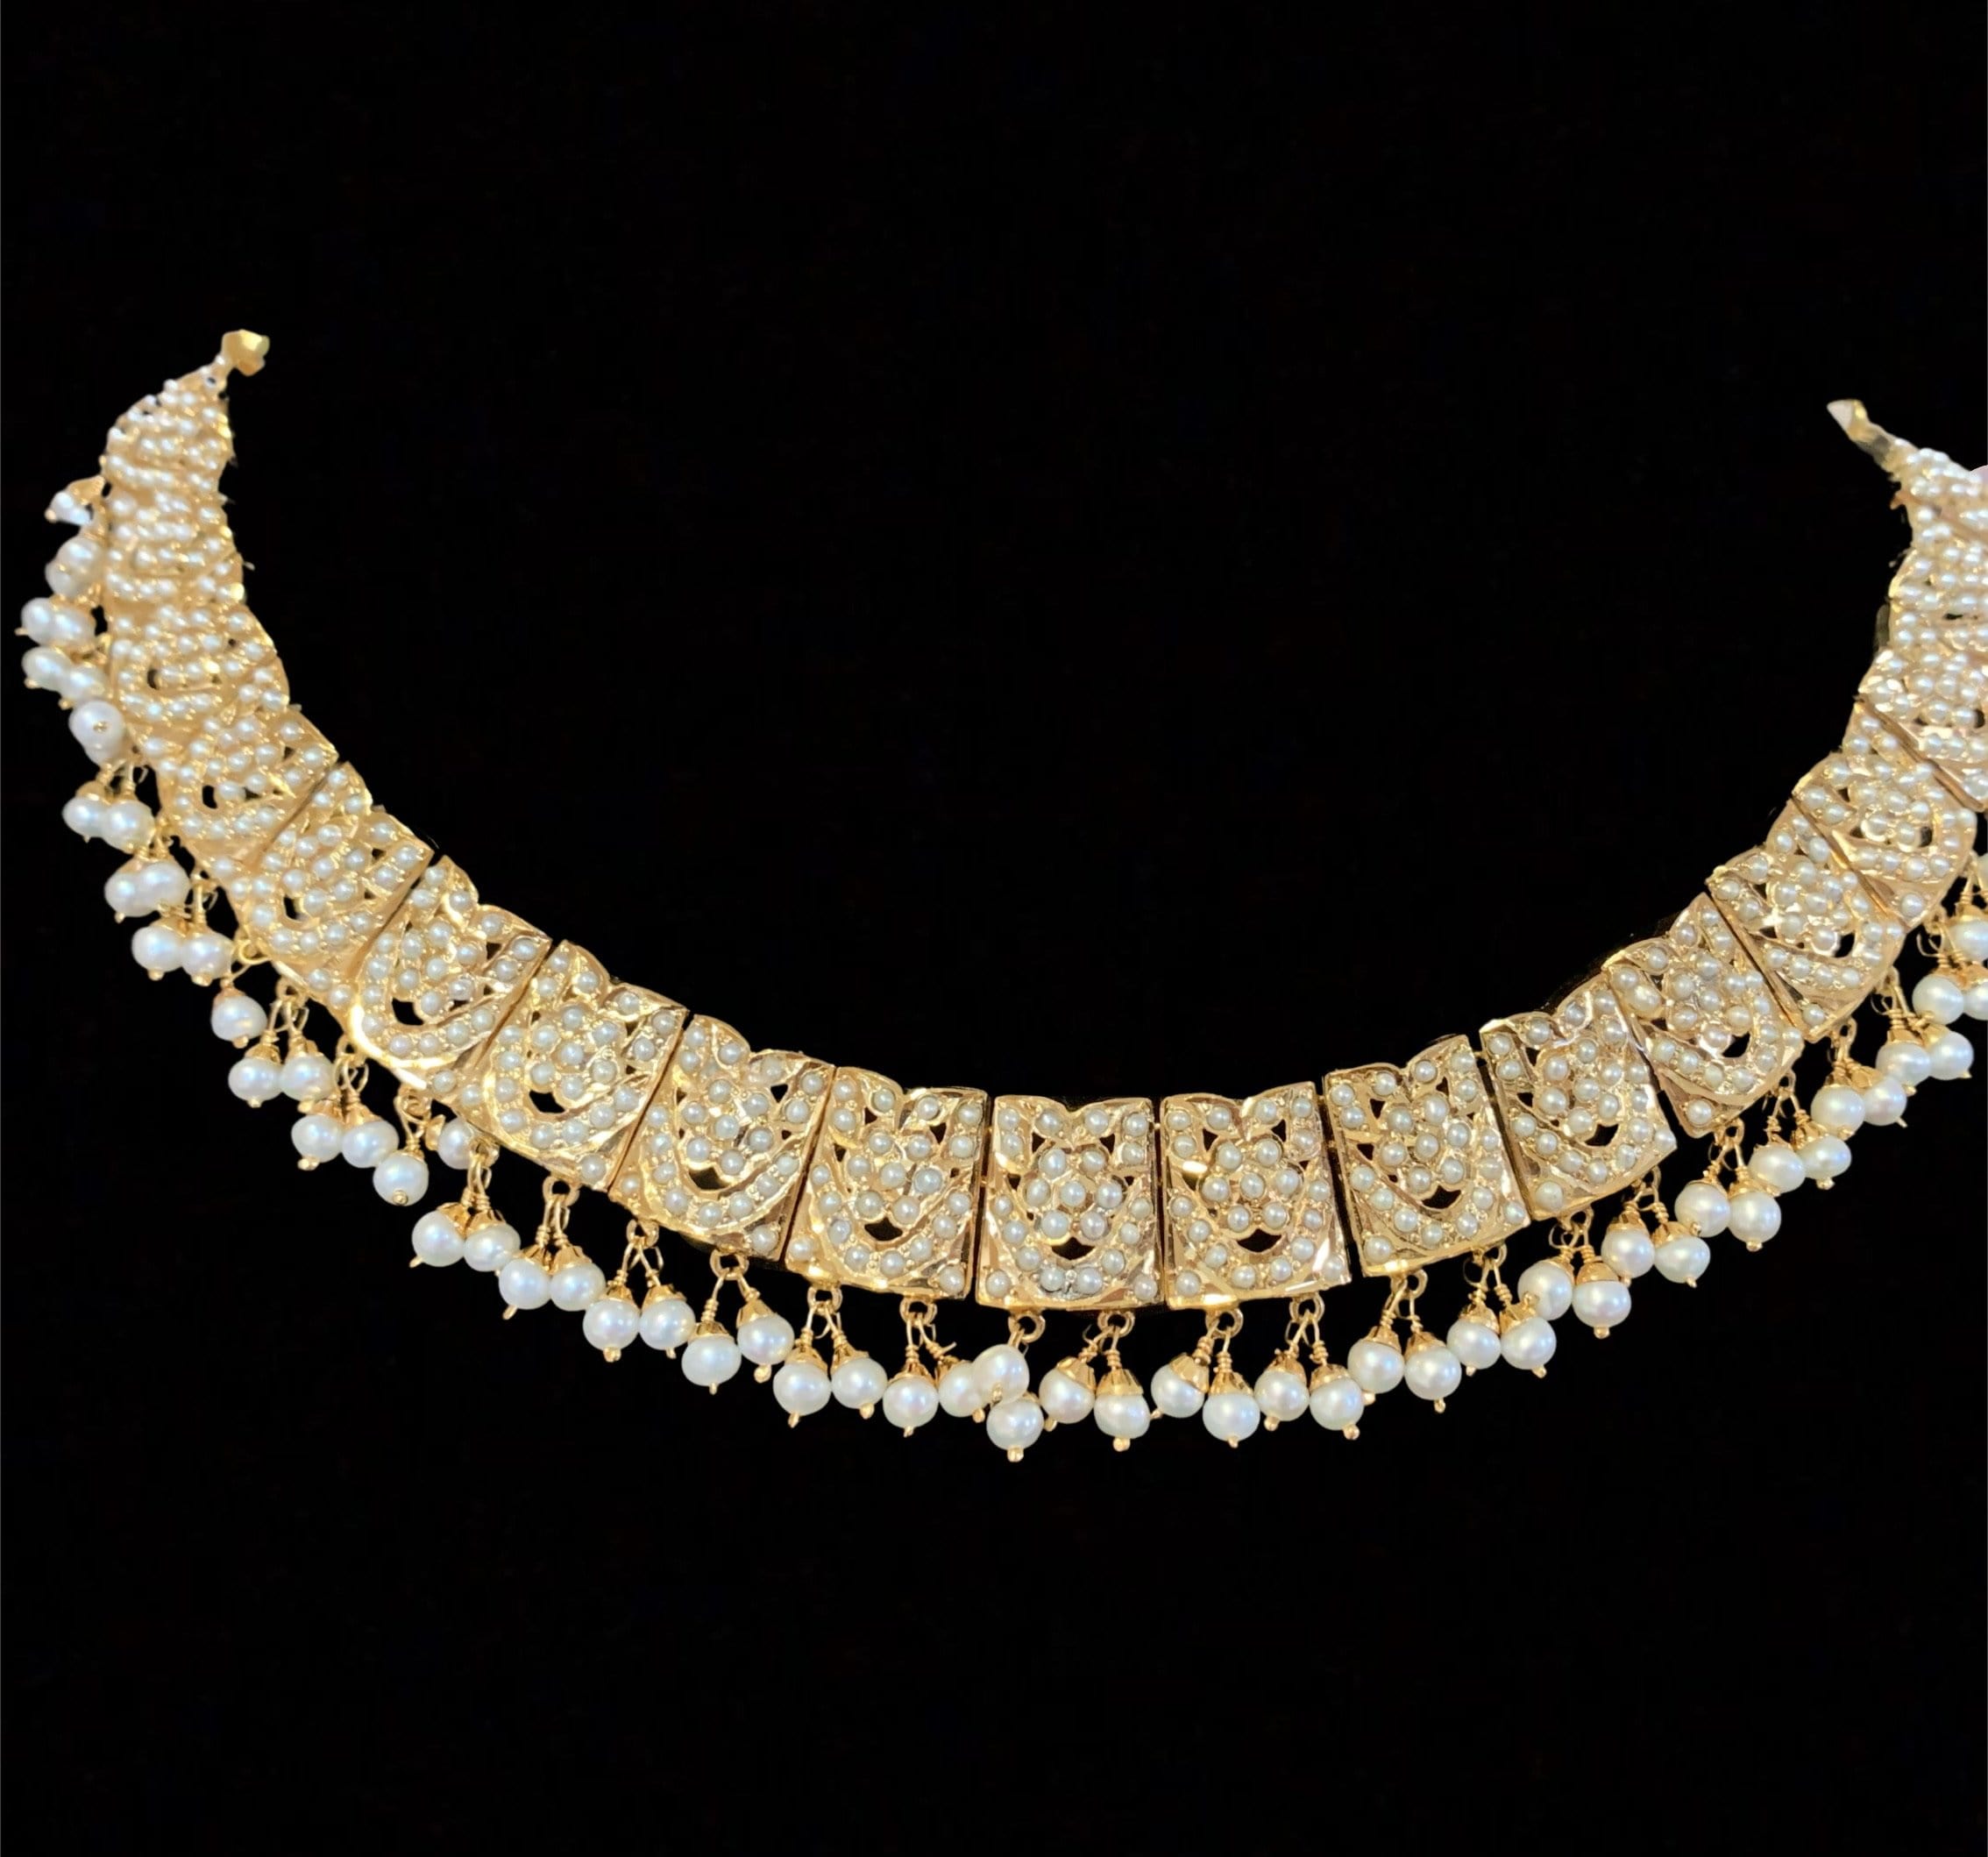 NS 021 – Deccan Jewelry